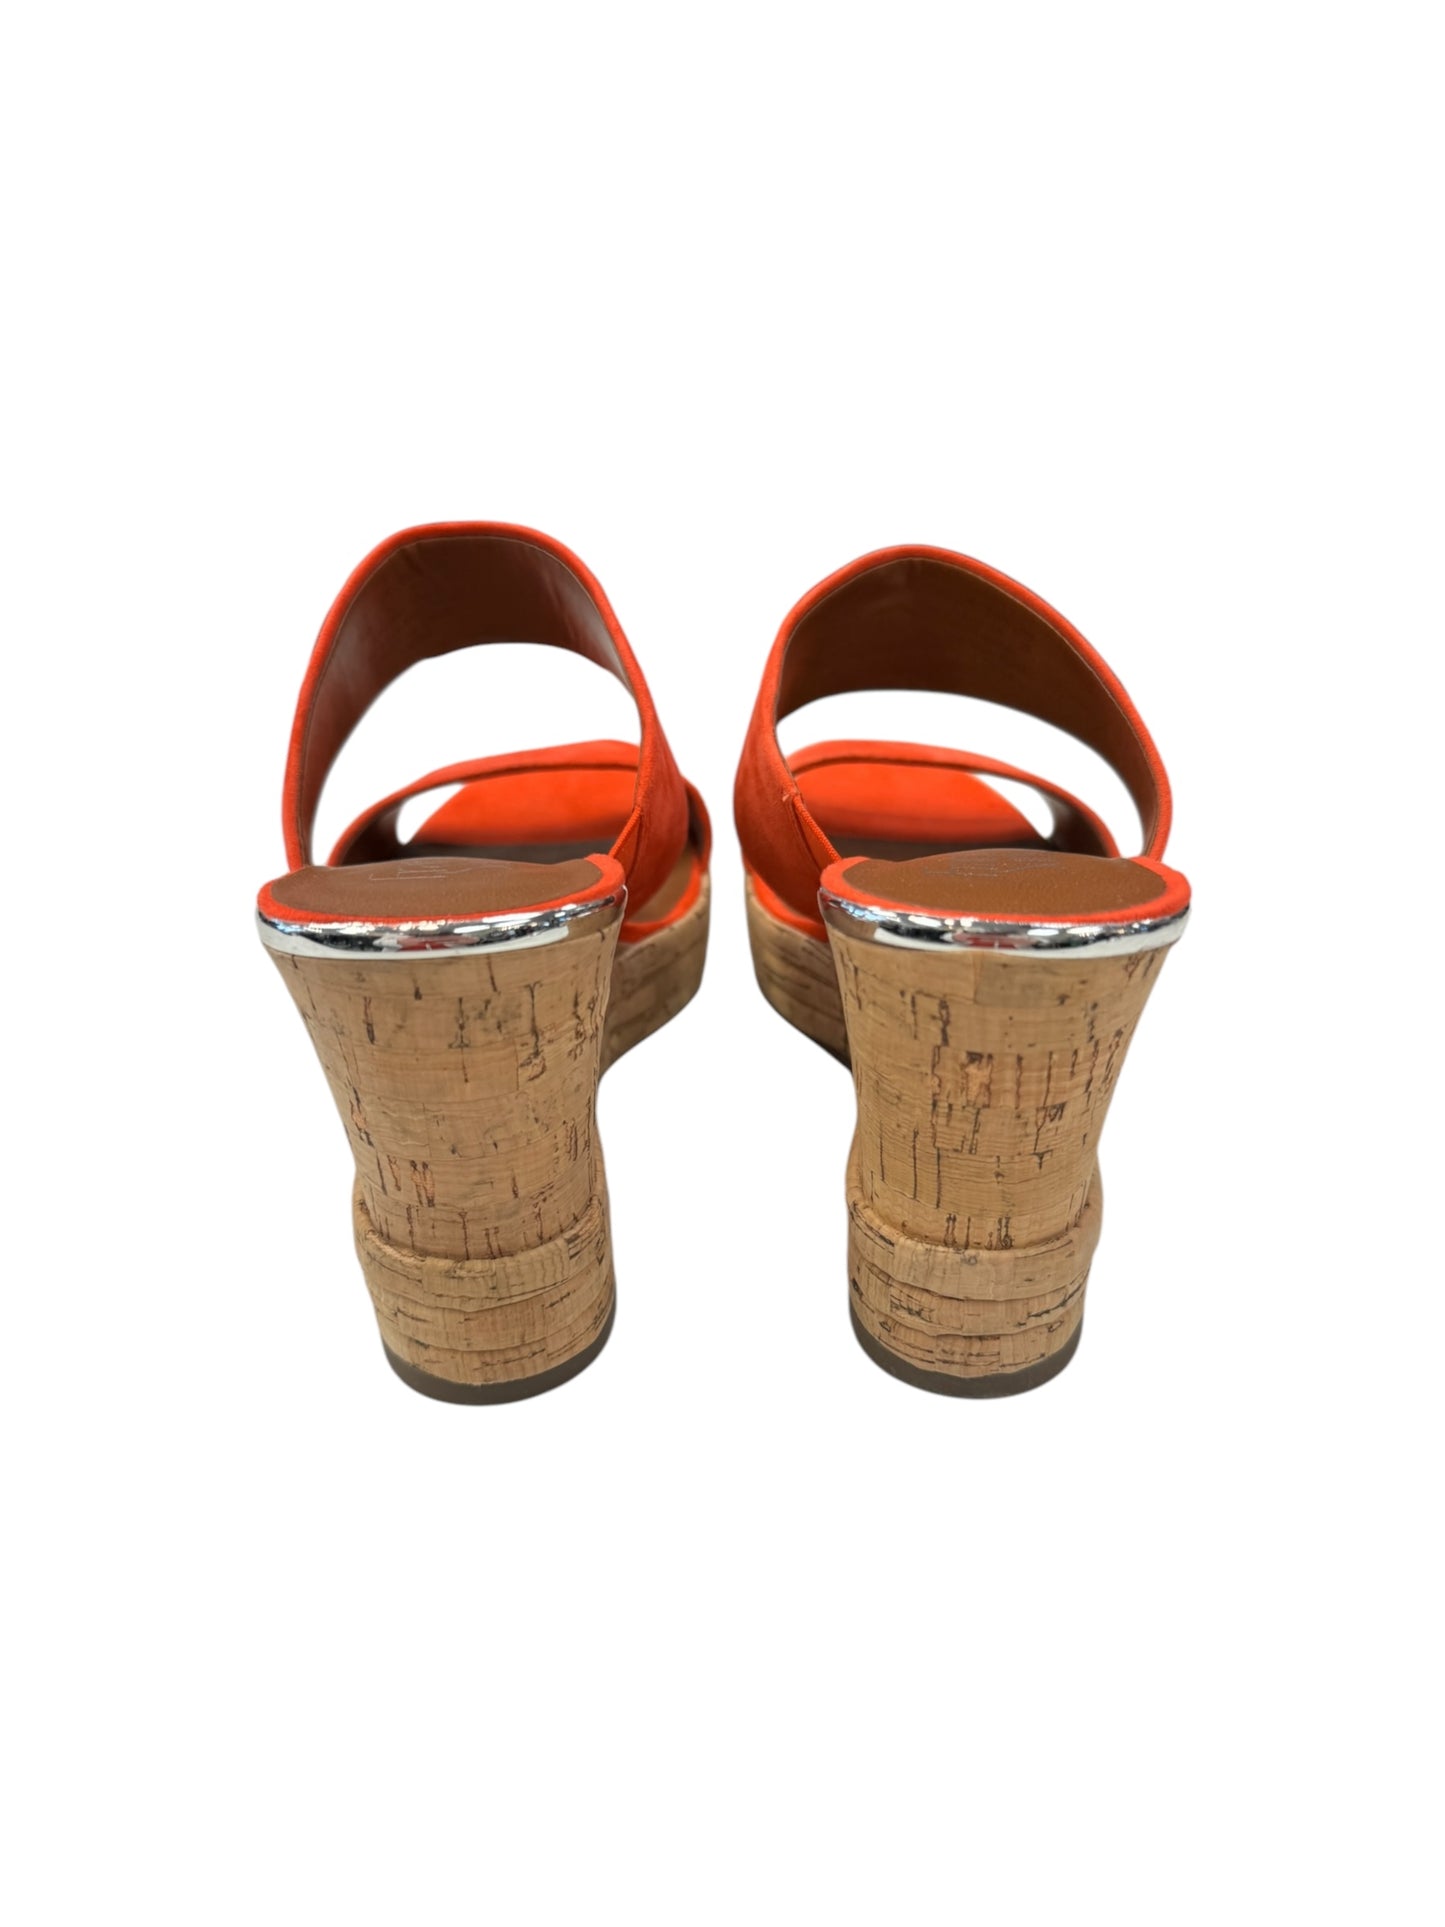 Sandals Heels Platform By Franco Sarto  Size: 8